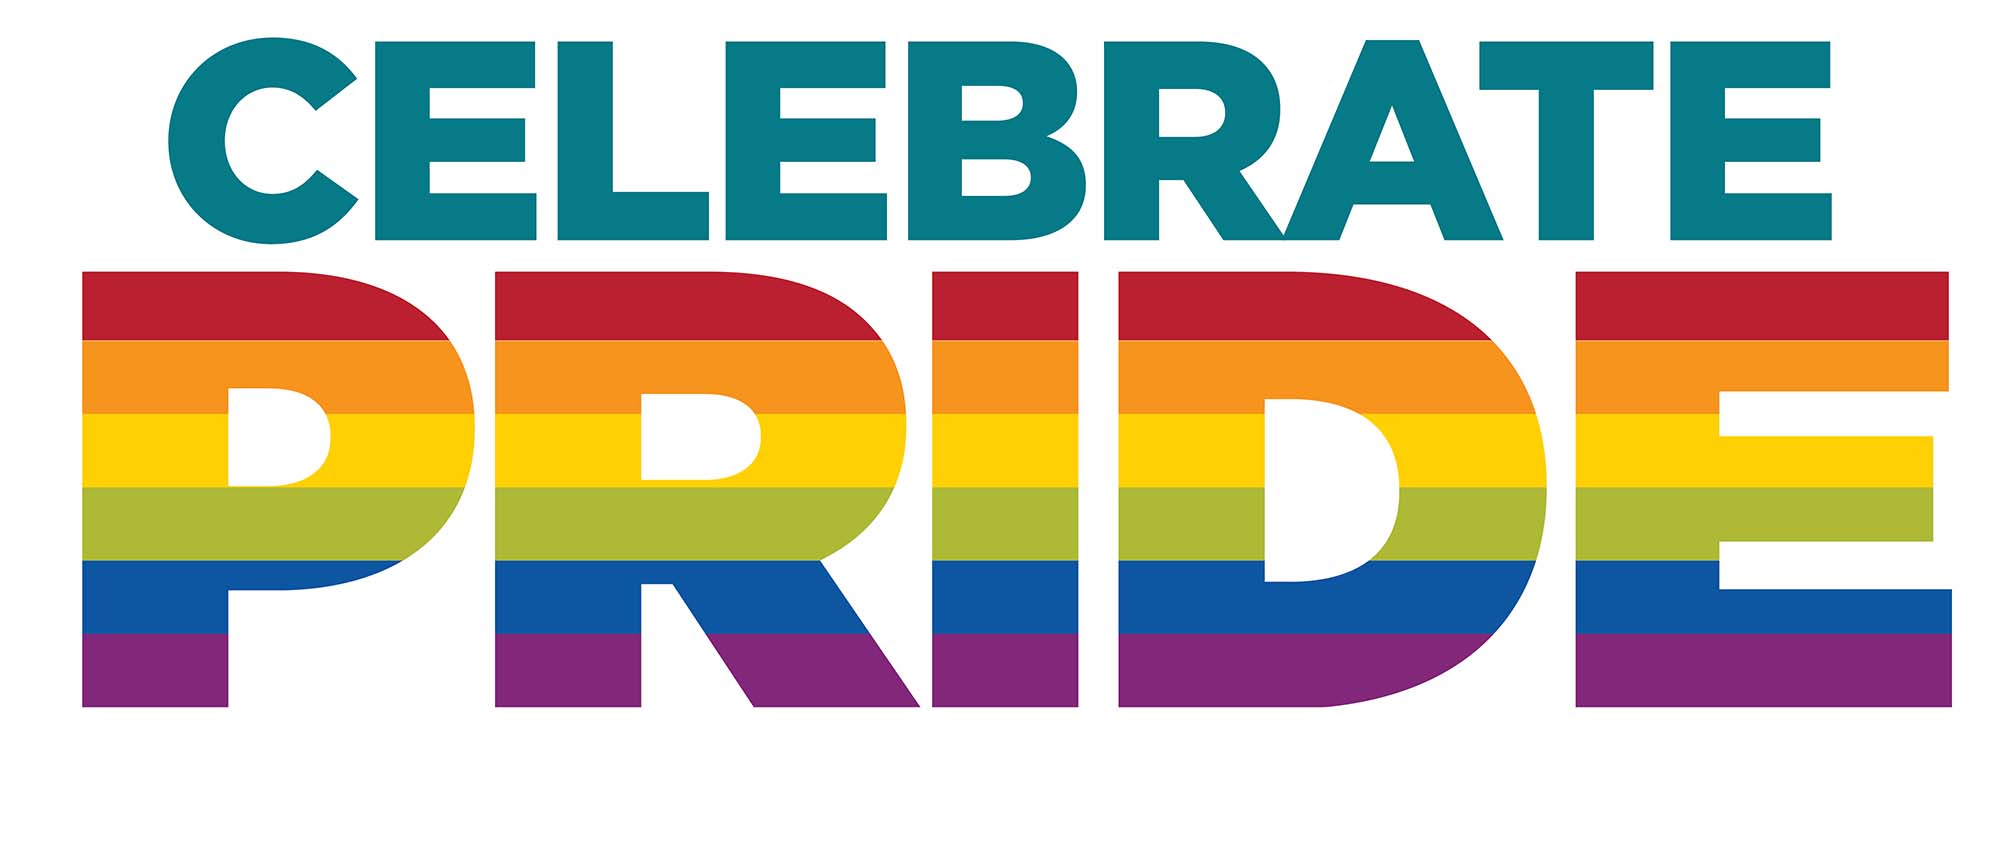 UNM 图形上写着“庆祝骄傲”，自豪感像彩虹一样